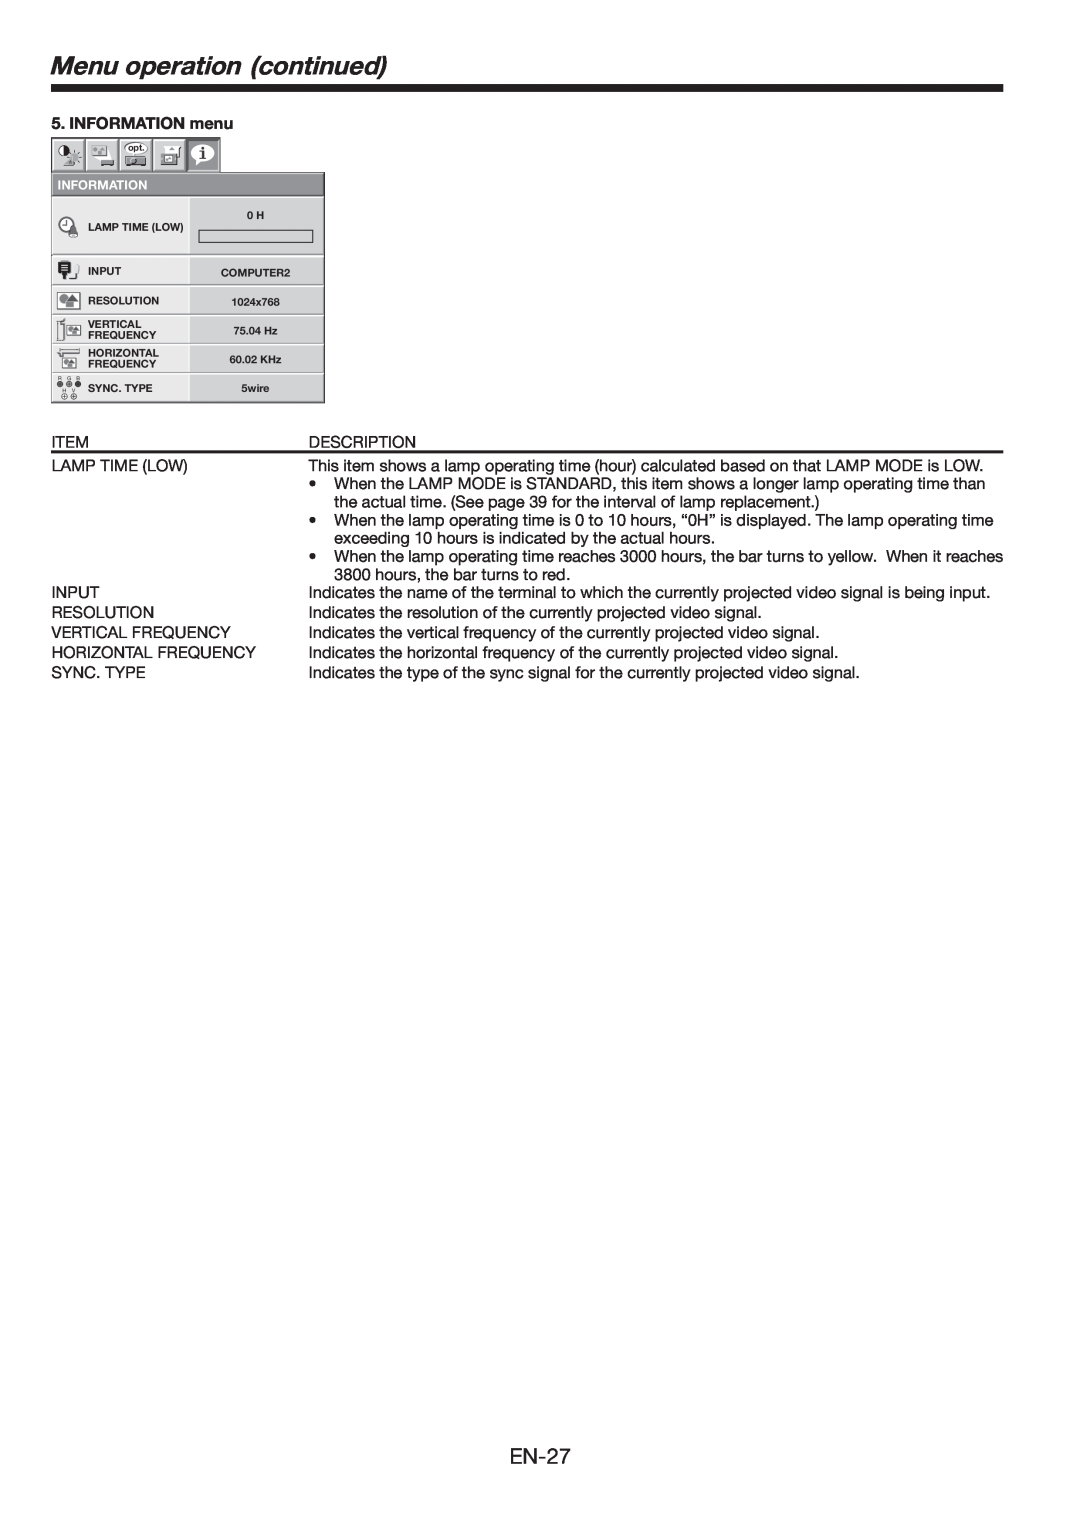 Mitsubishi Electronics FL6900U user manual Menu operation continued, EN-27, INFORMATION menu 